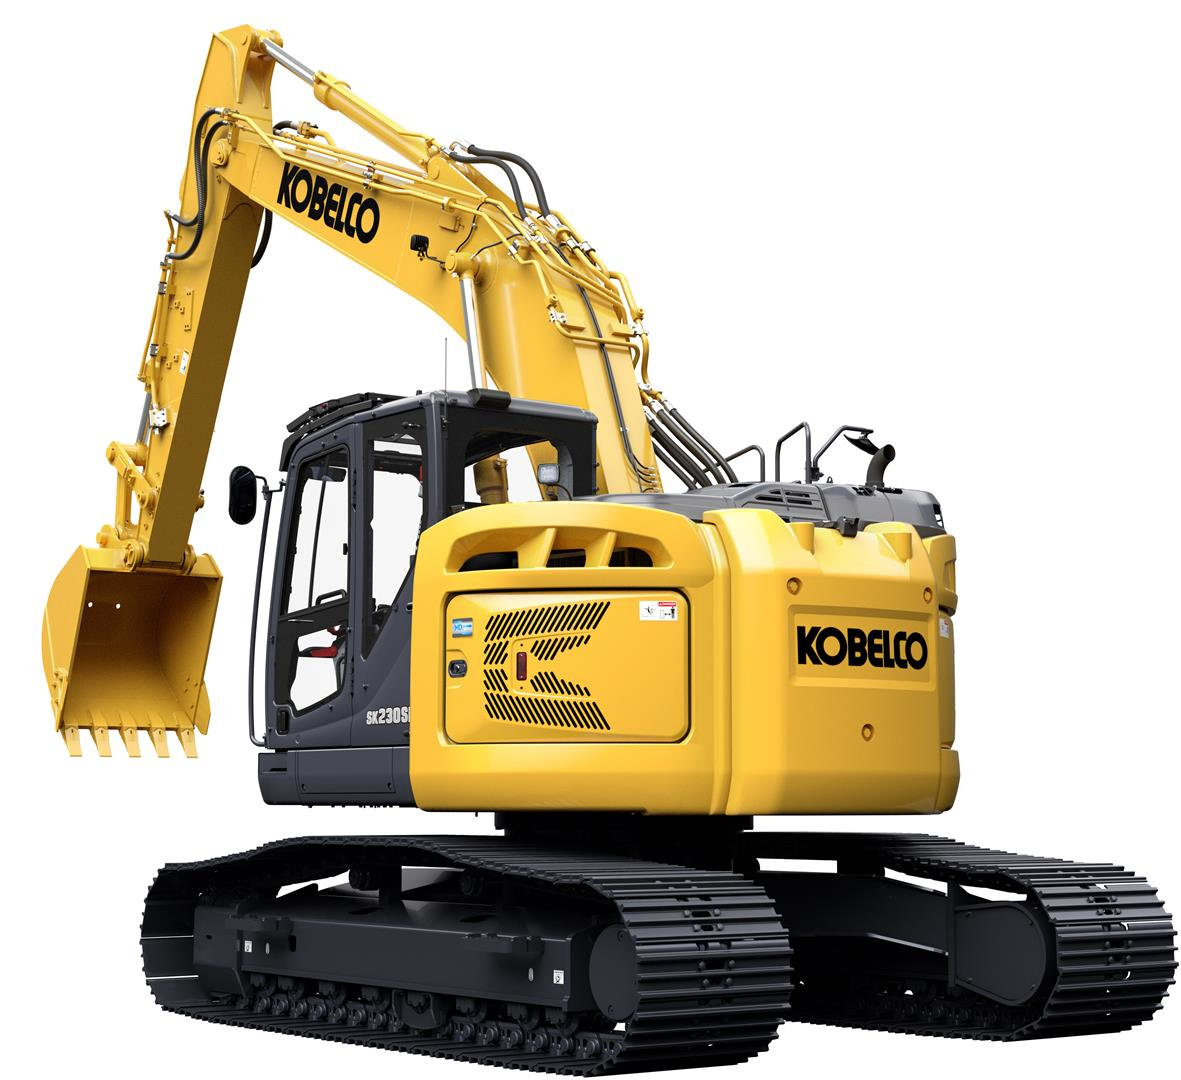 Kobelco intros SK230 and SK270-7 short radius excavators | Equipment World